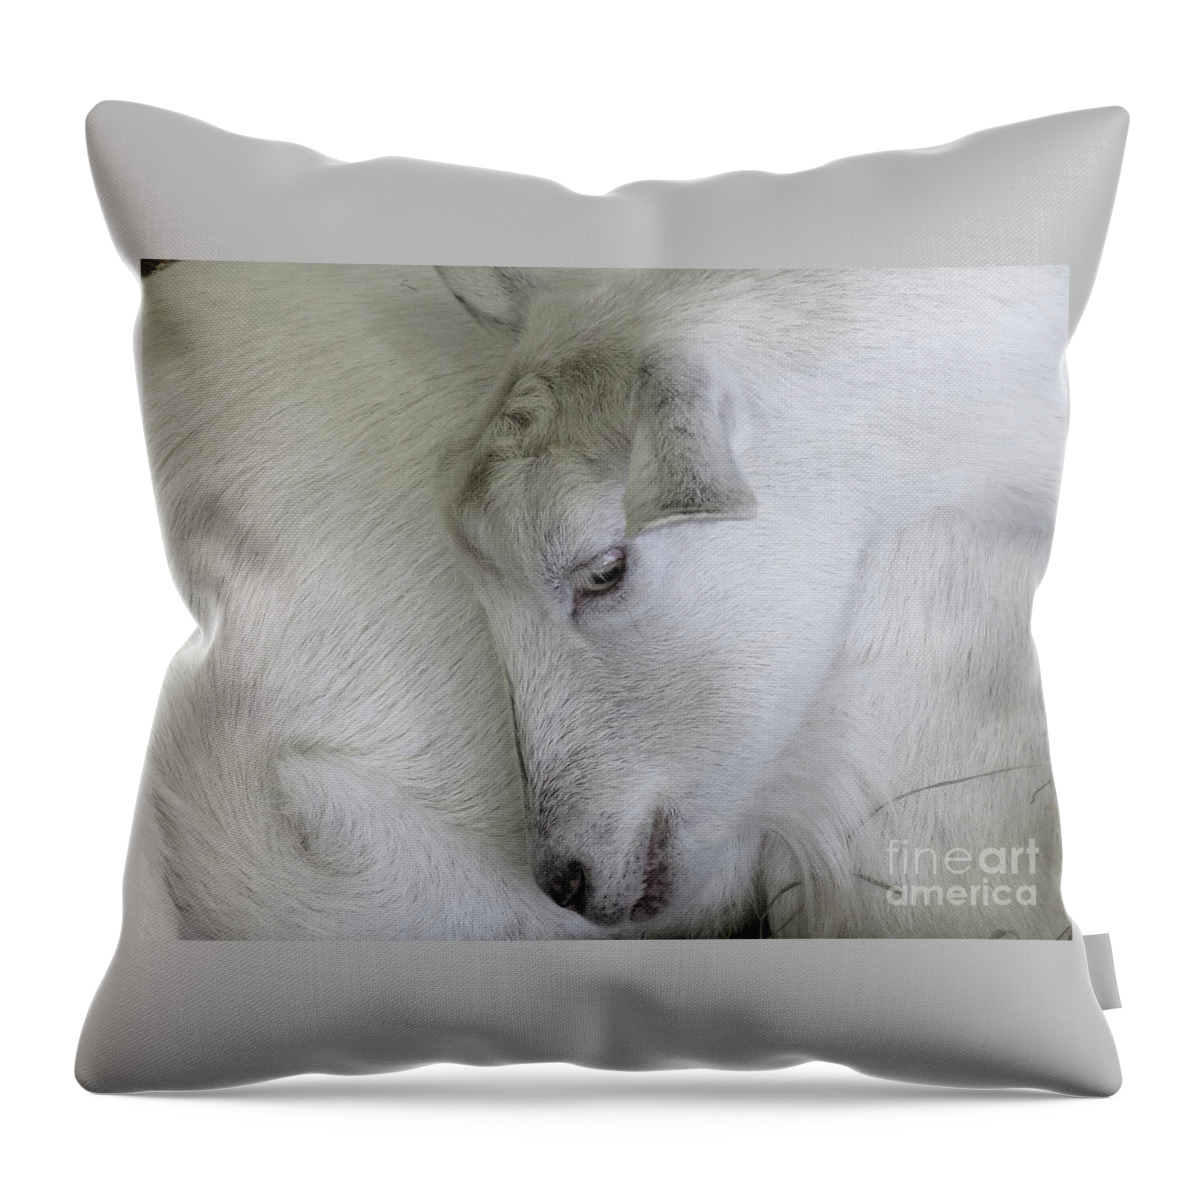 Goat Throw Pillow featuring the photograph Baby Goats by Ann Horn